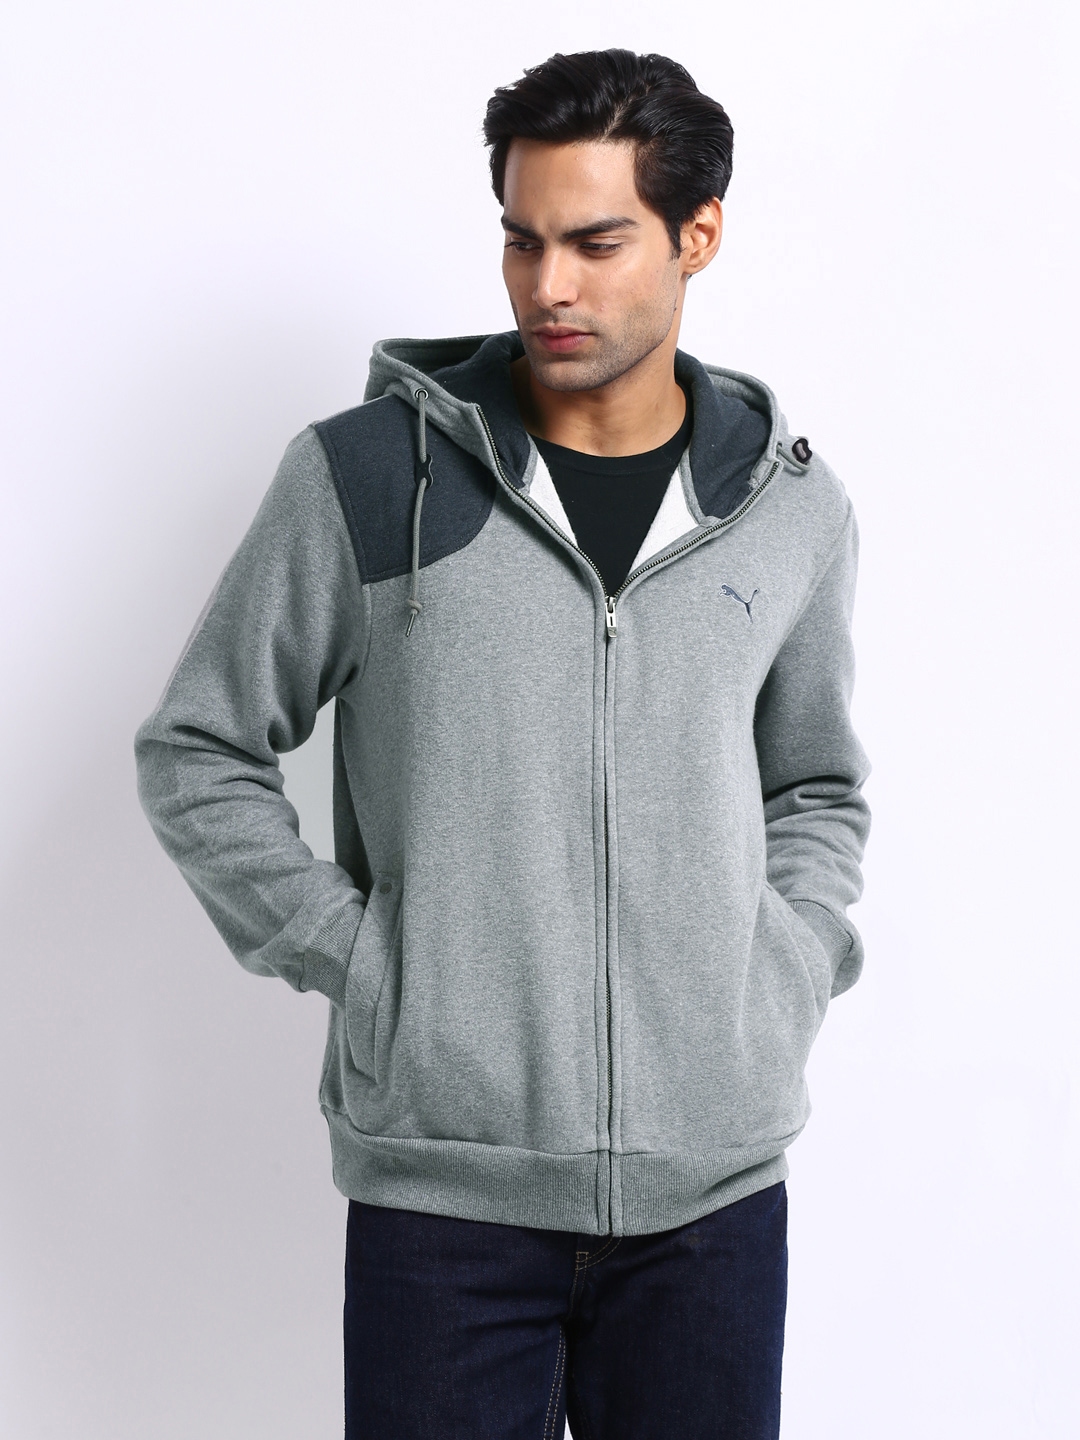 Download Buy Puma Men Grey Melange Hooded Sweatshirt - Sweatshirts ...